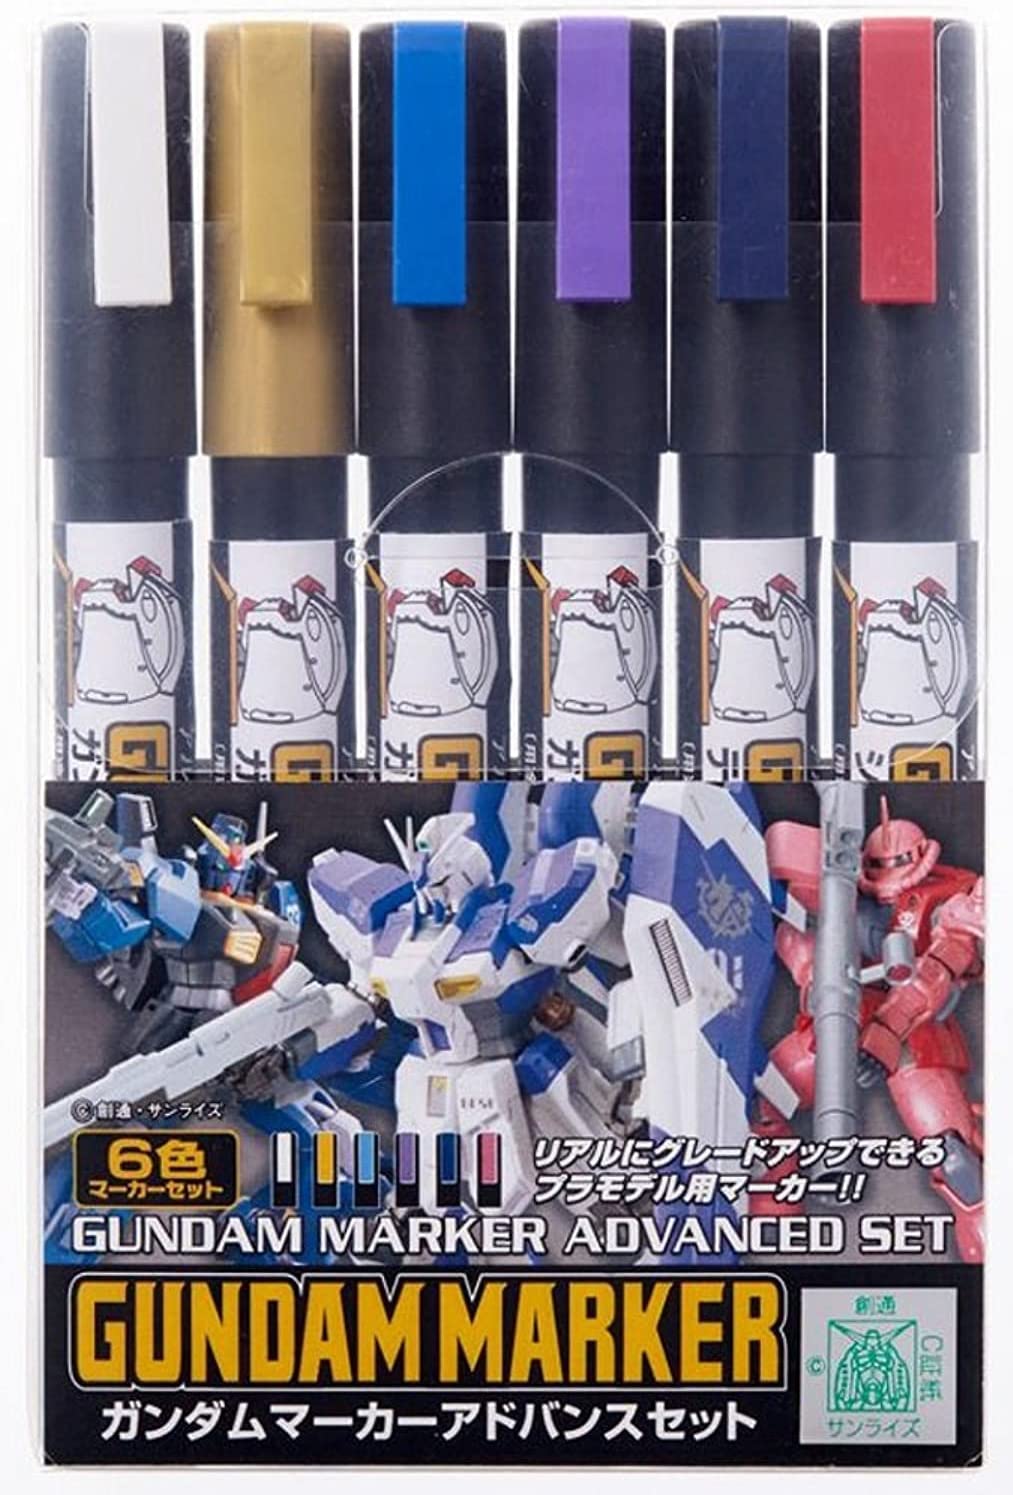 GM06 Blue Gundam Marker